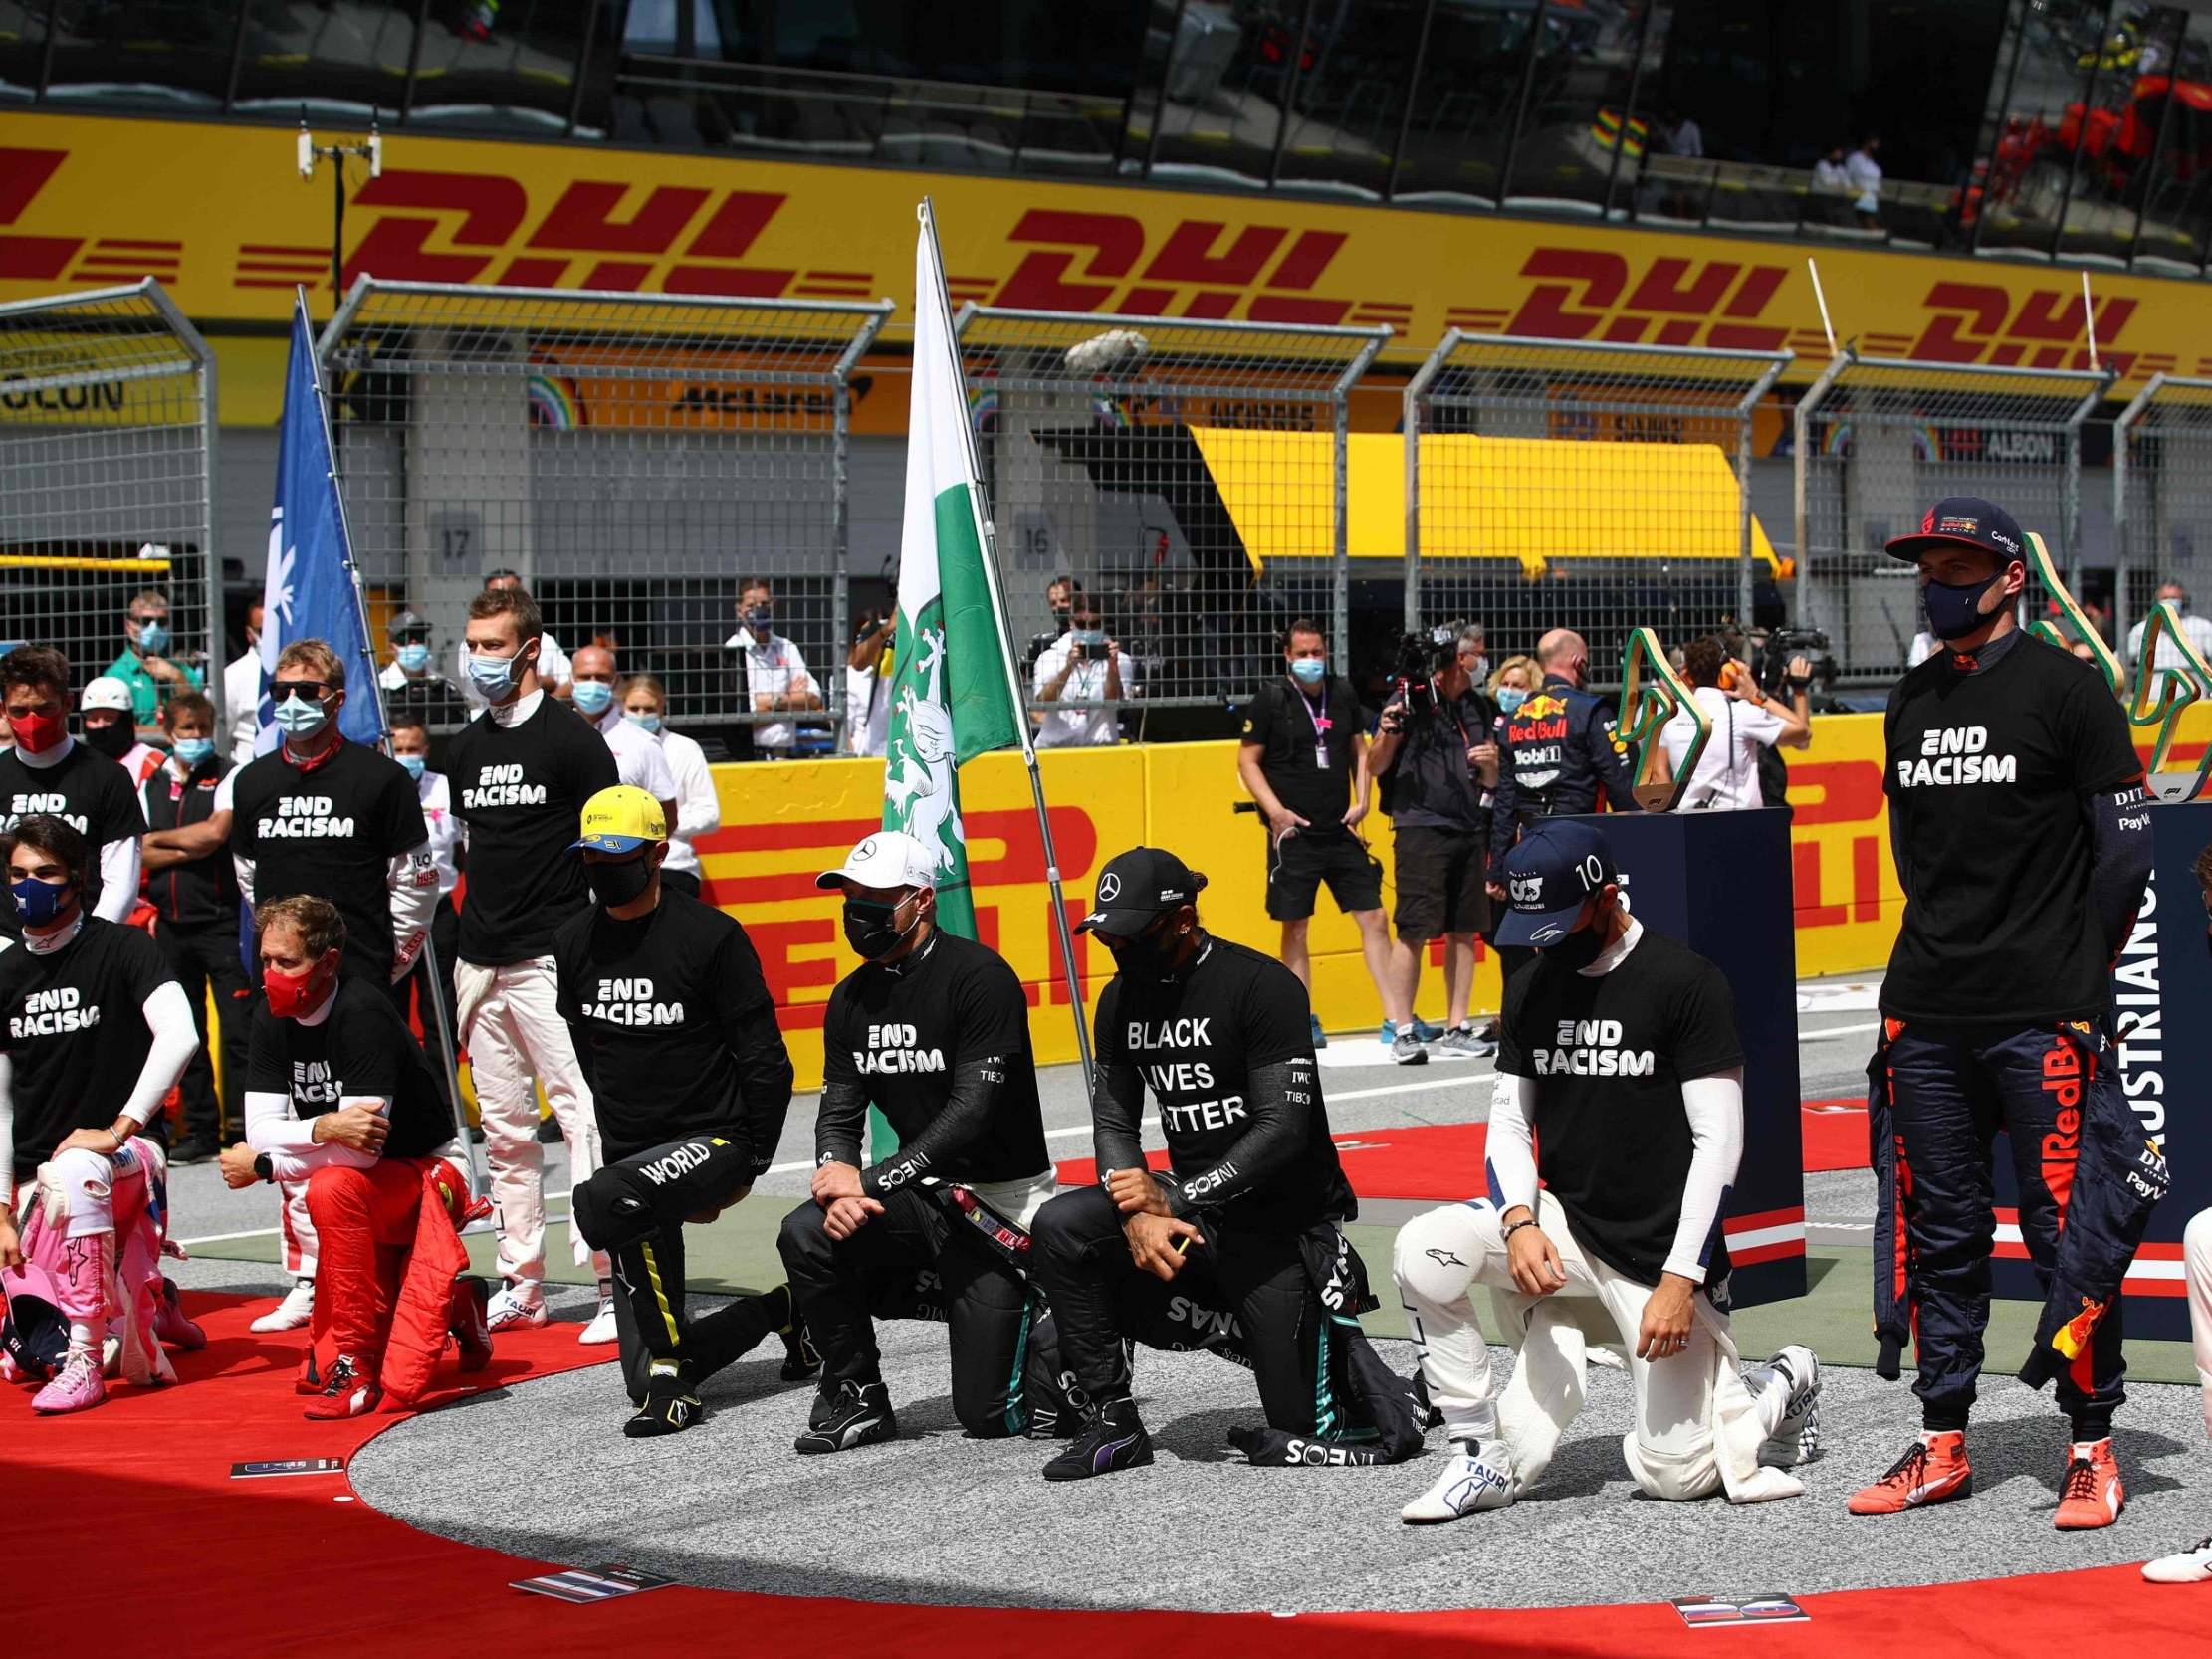 F1 drivers take a knee as Max Verstappen, Daniil Kvyat, Kimi Raikkonen and Charles Leclerc stay standing